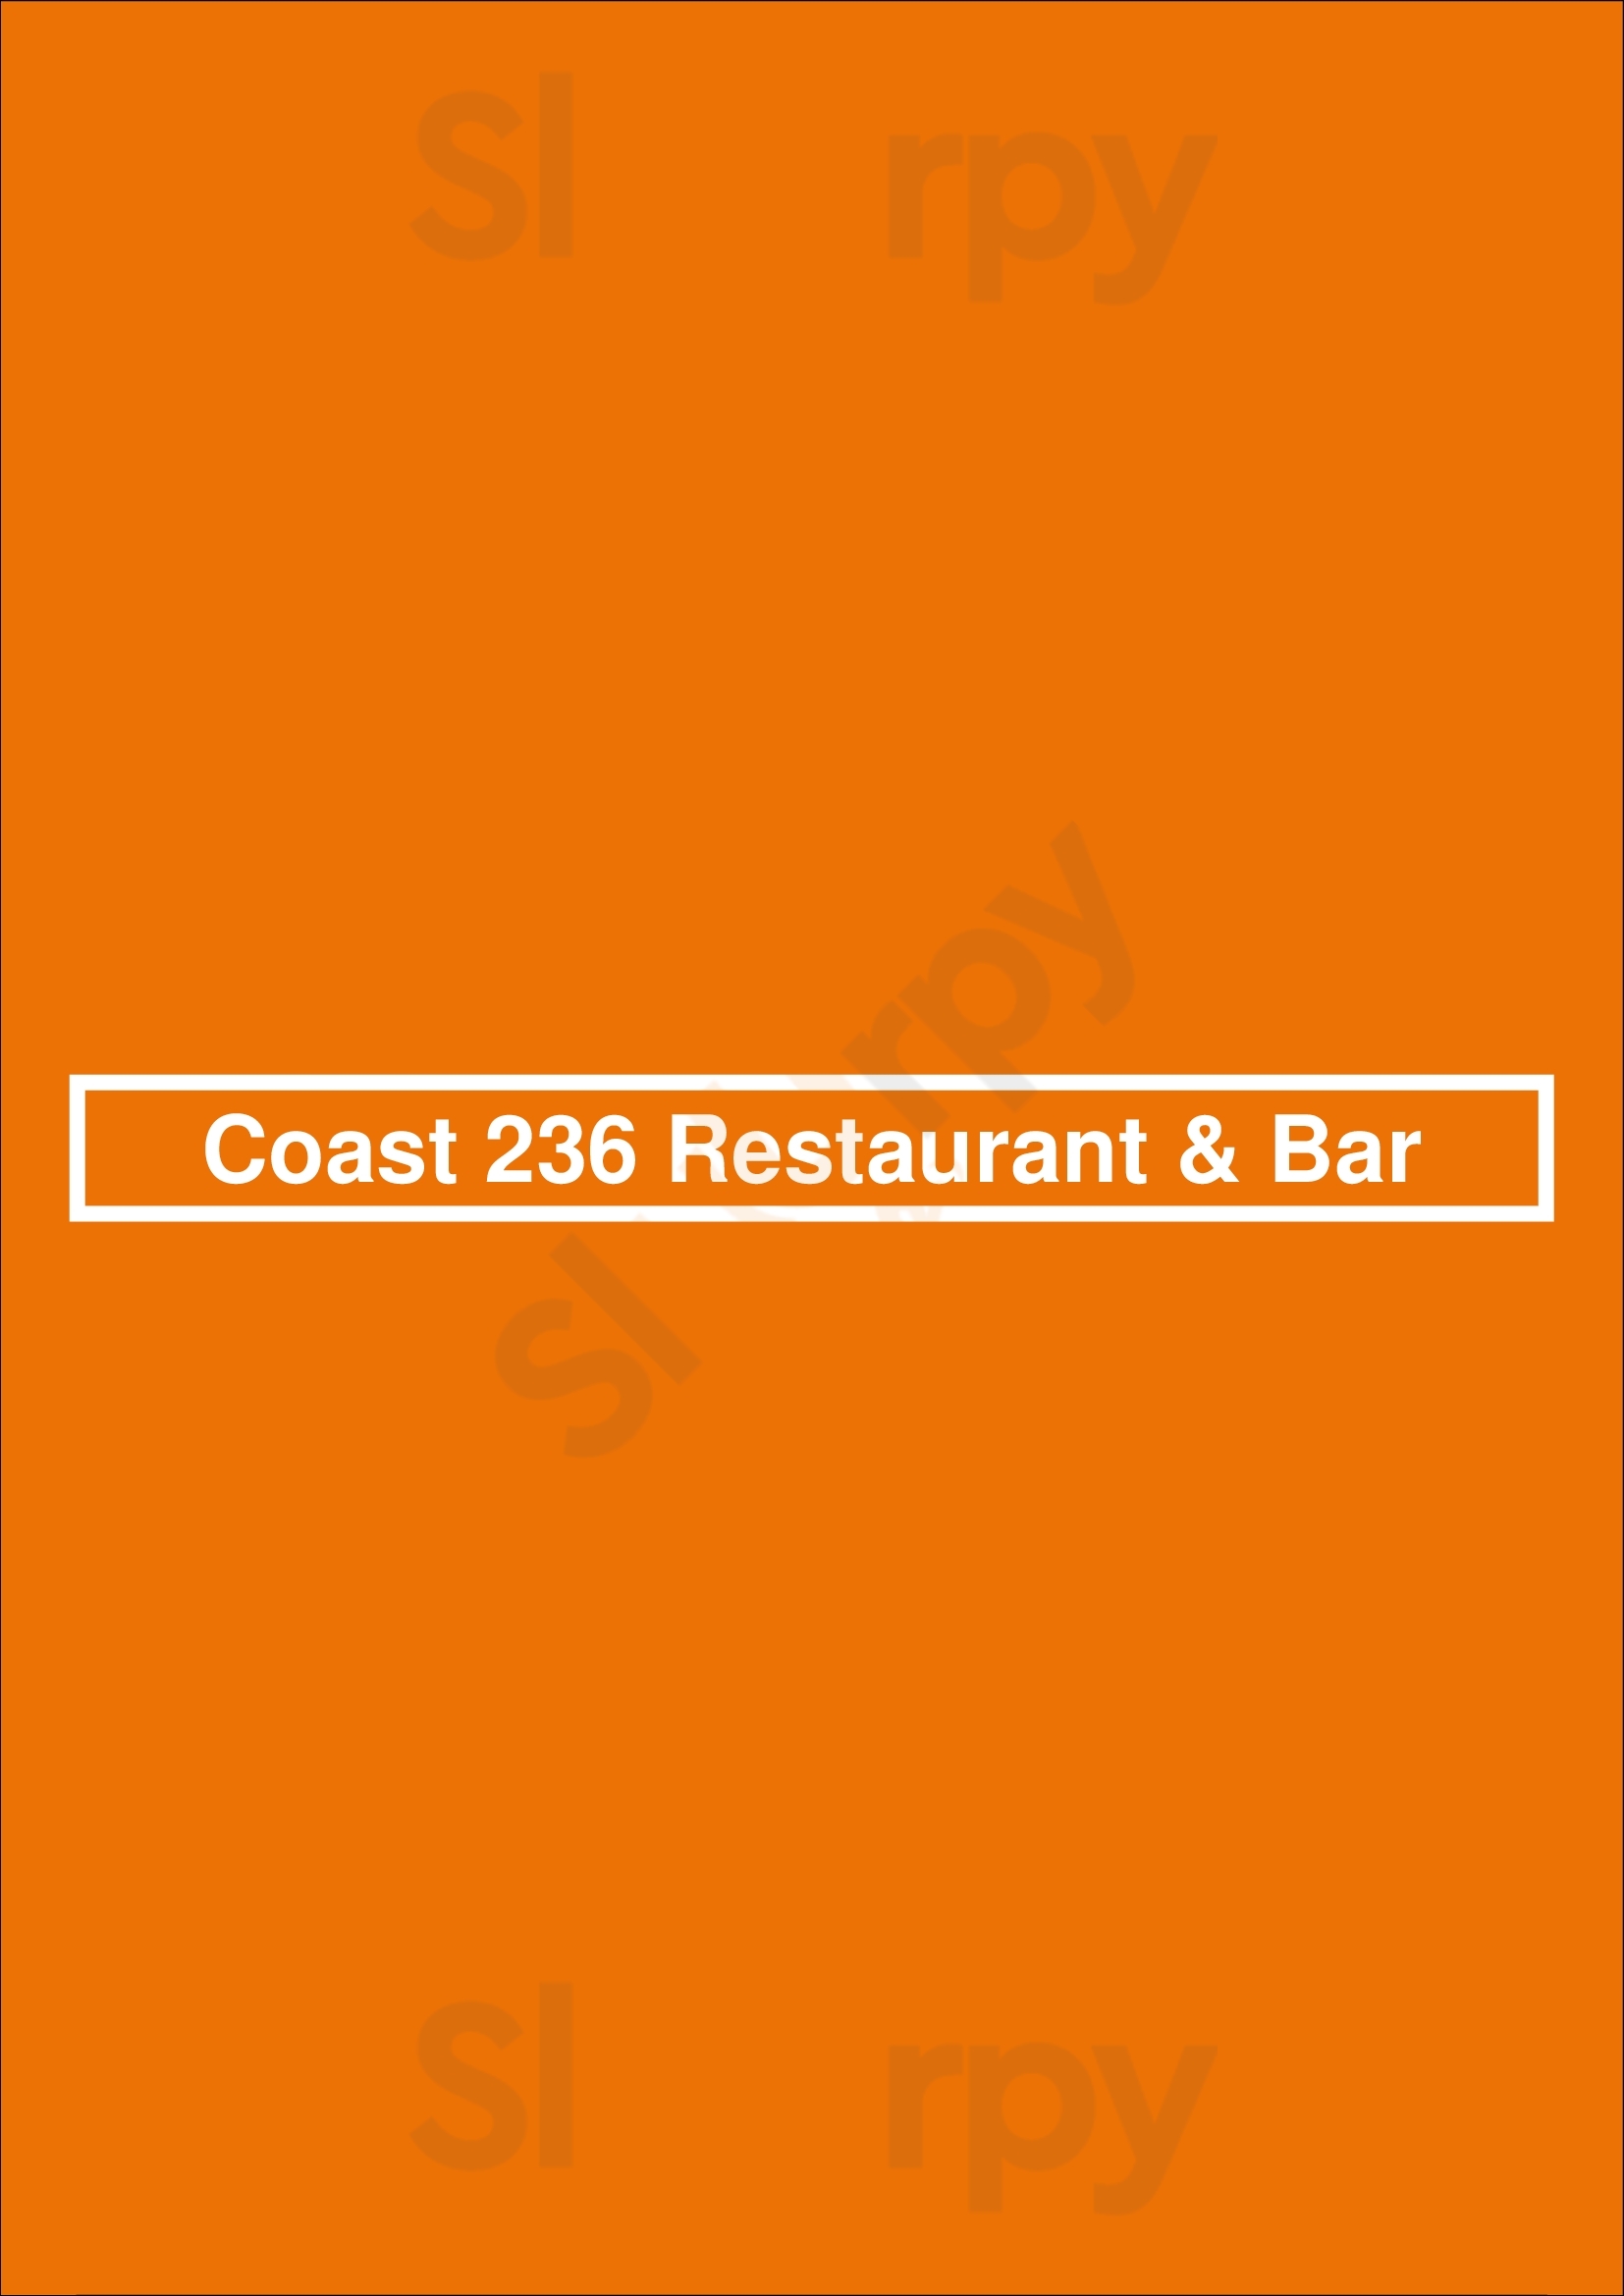 Coast 236 Restaurant & Bar Saugatuck Menu - 1